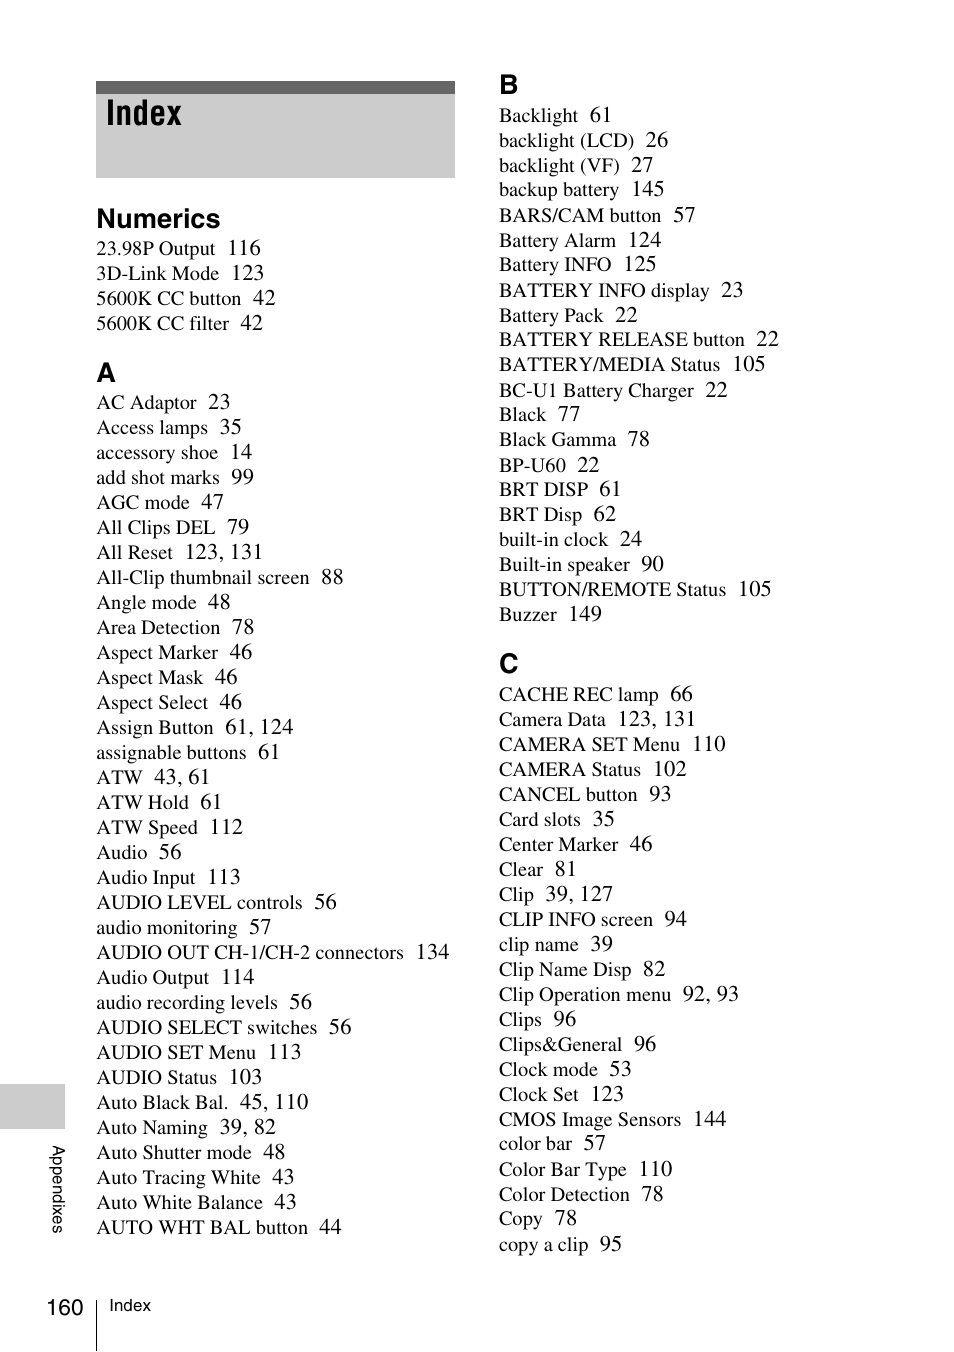 Index, Numerics | Sony PMW-F3K User Manual | Page 160 / 164